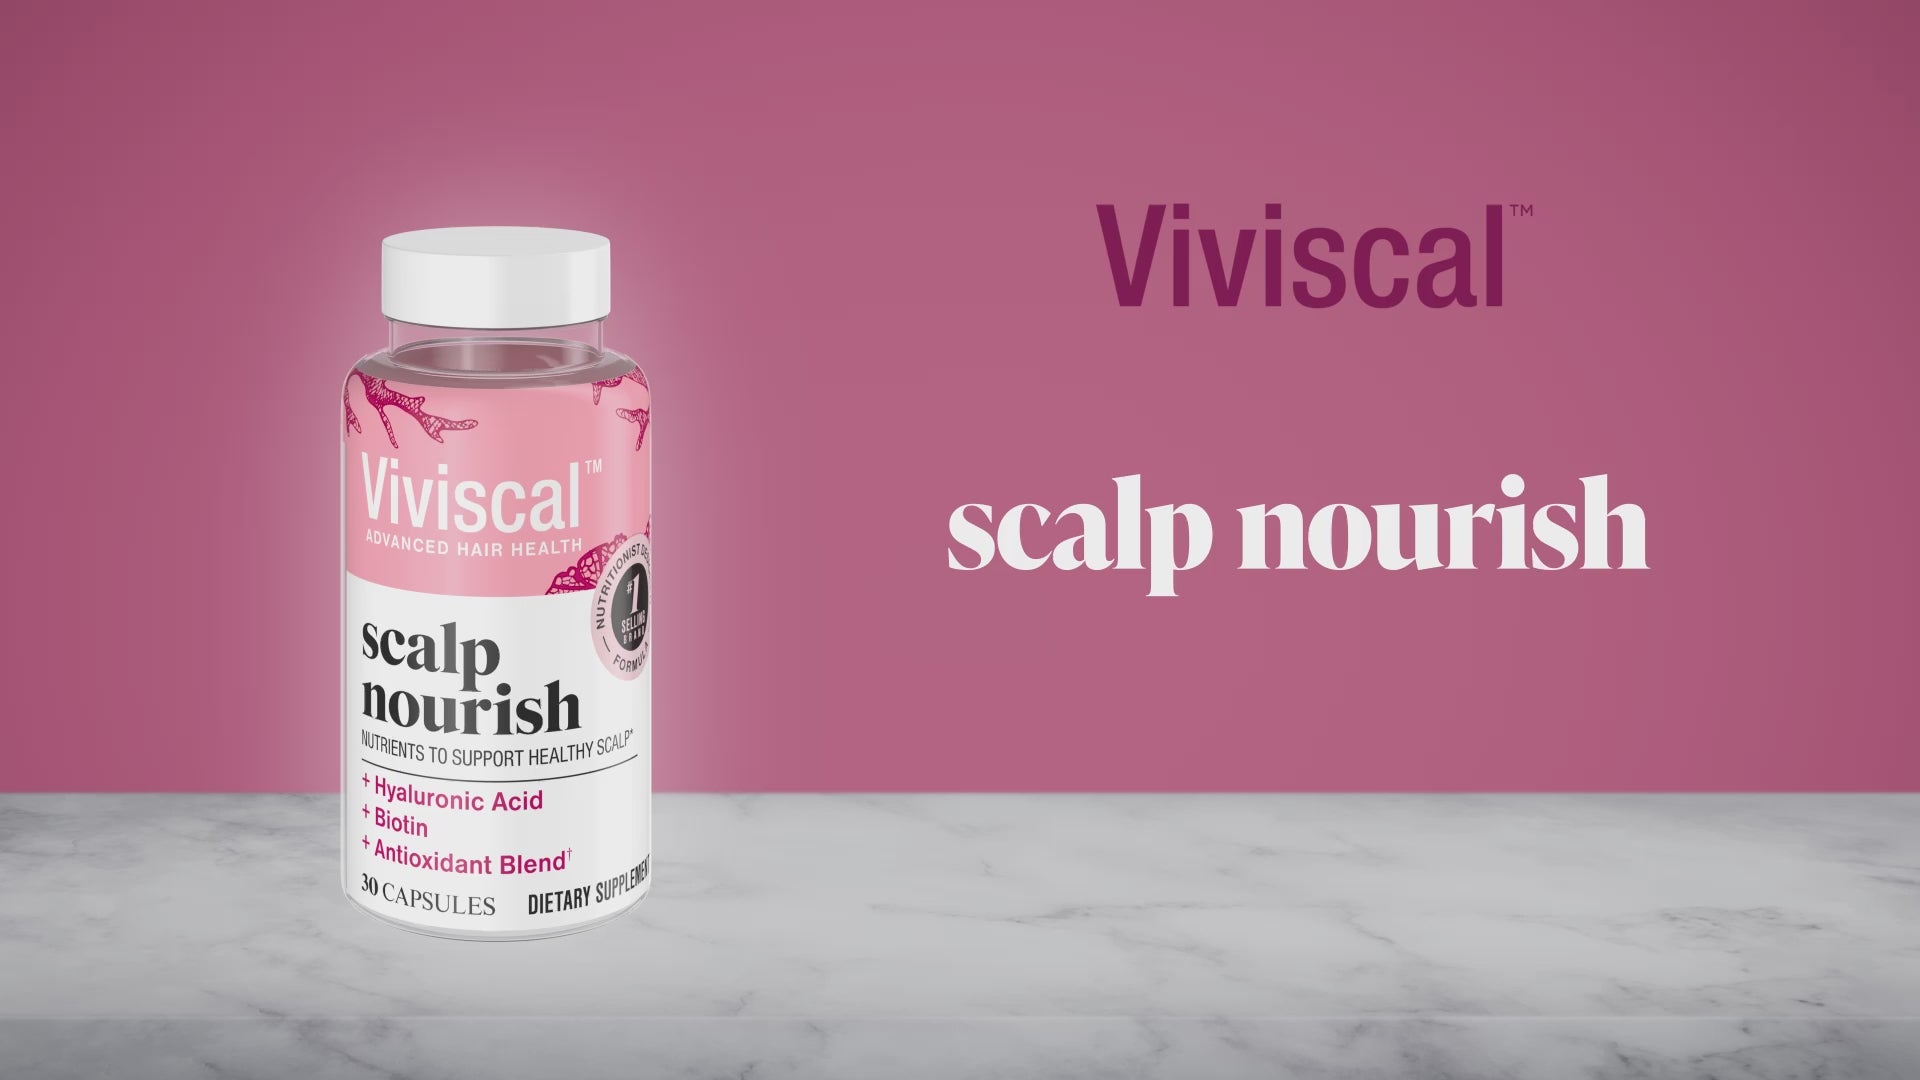 video showing Viviscal scalp nourish